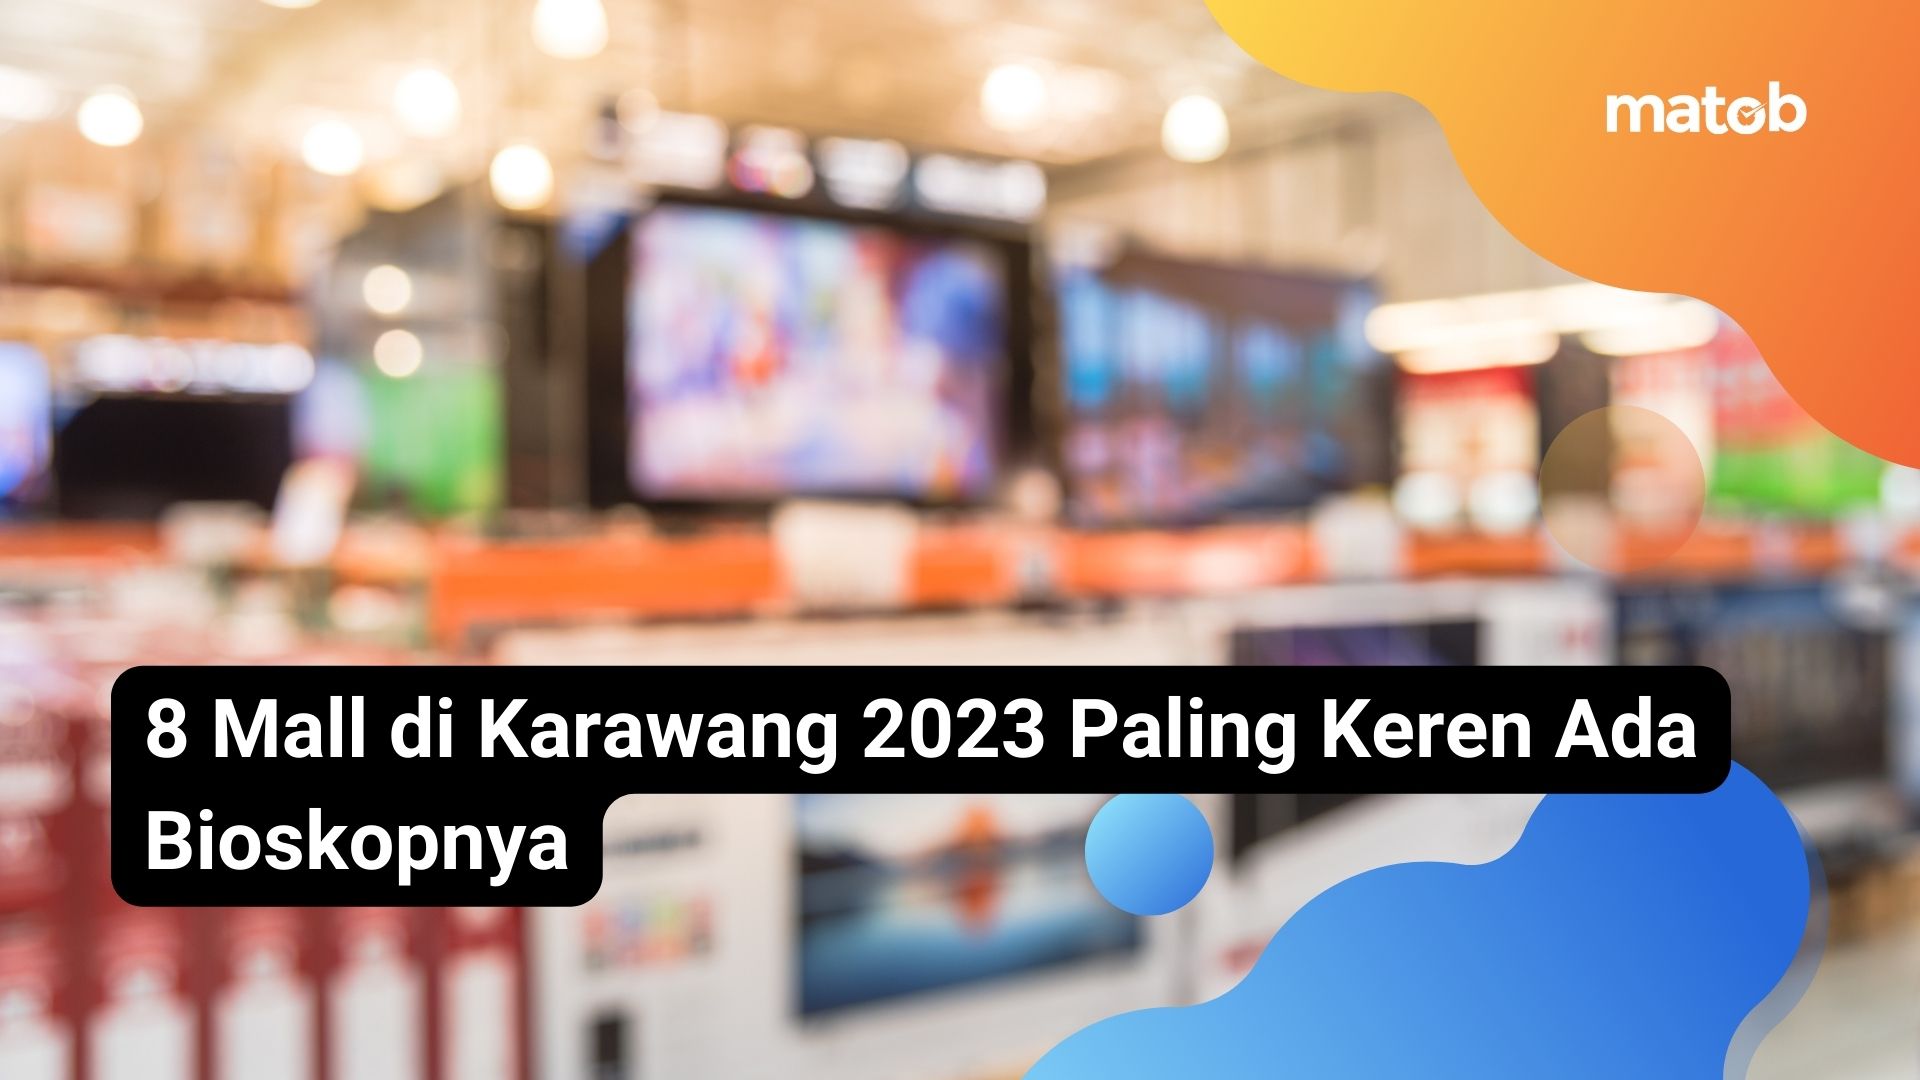 8 Mall di Karawang 2023 Paling Keren Ada Bioskopnya